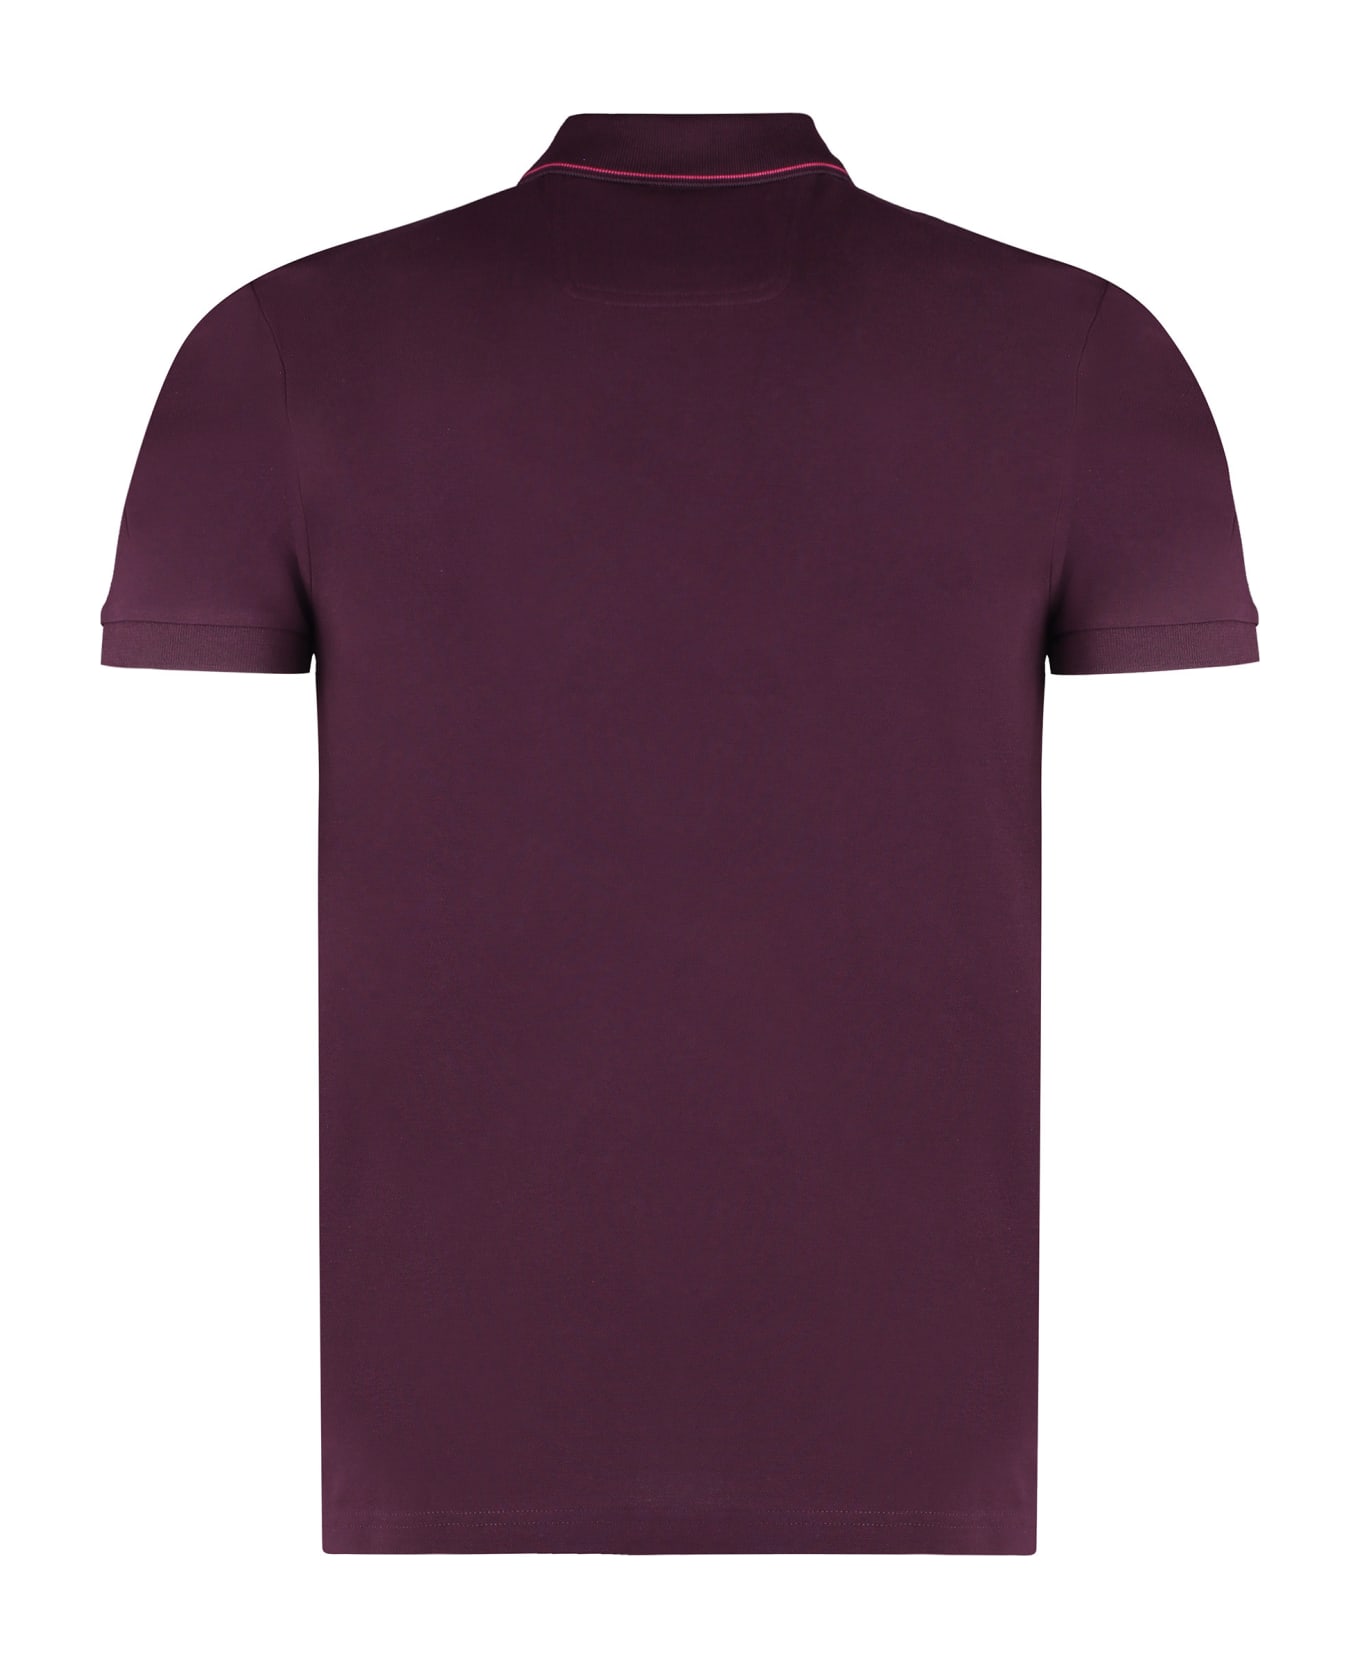 Hugo Boss Short Sleeve Cotton Polo Shirt - Red-purple or grape